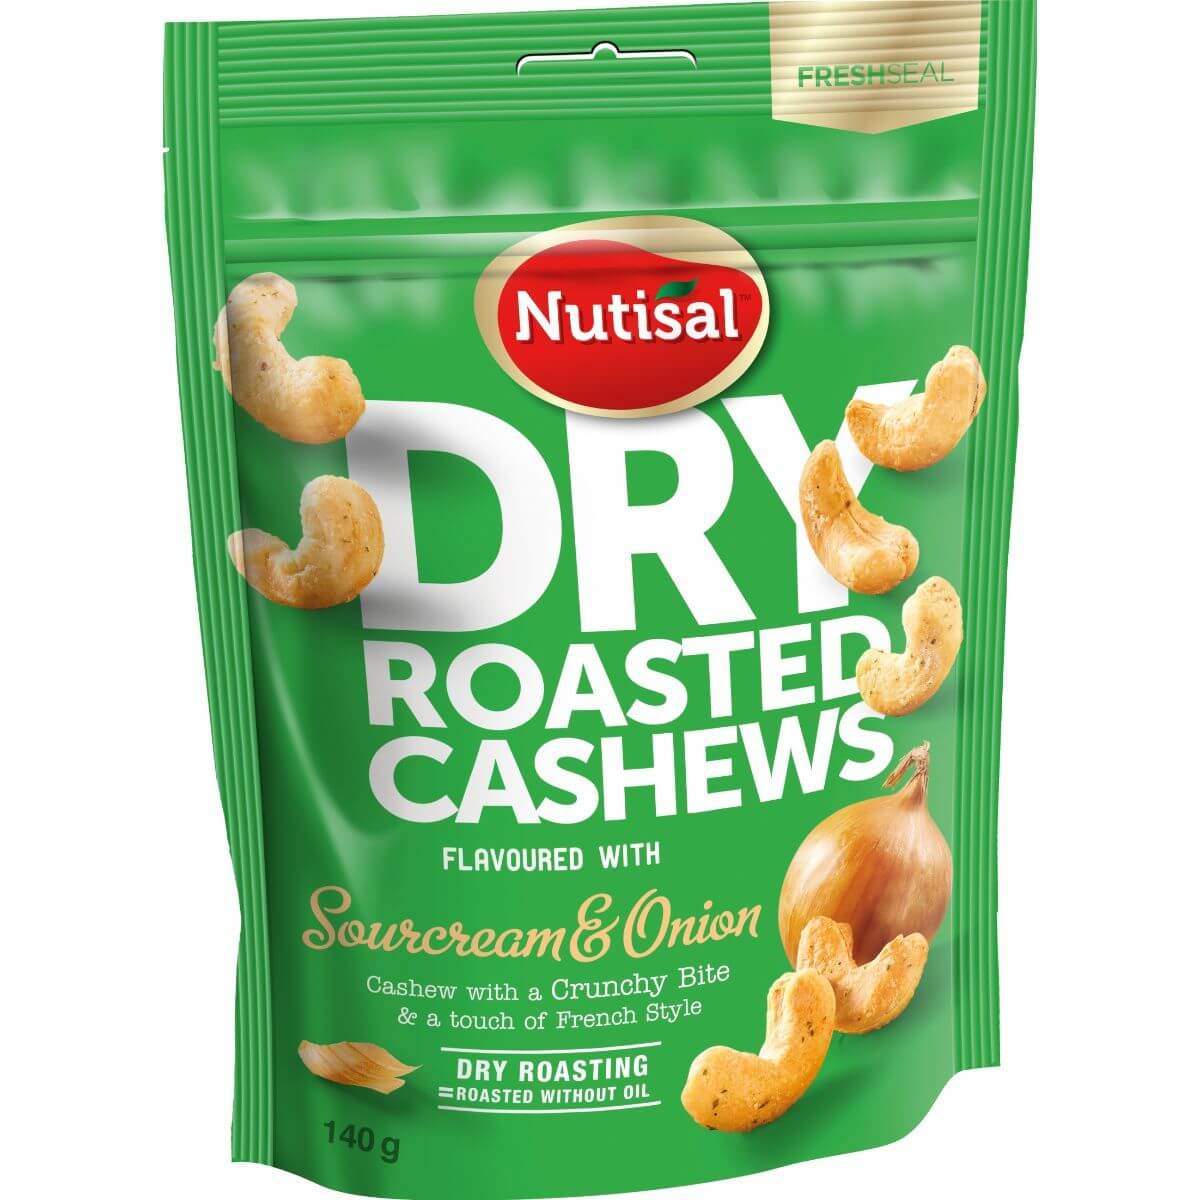 Nutisal Dry Roasted Cashews Sourcream & Onion 140g